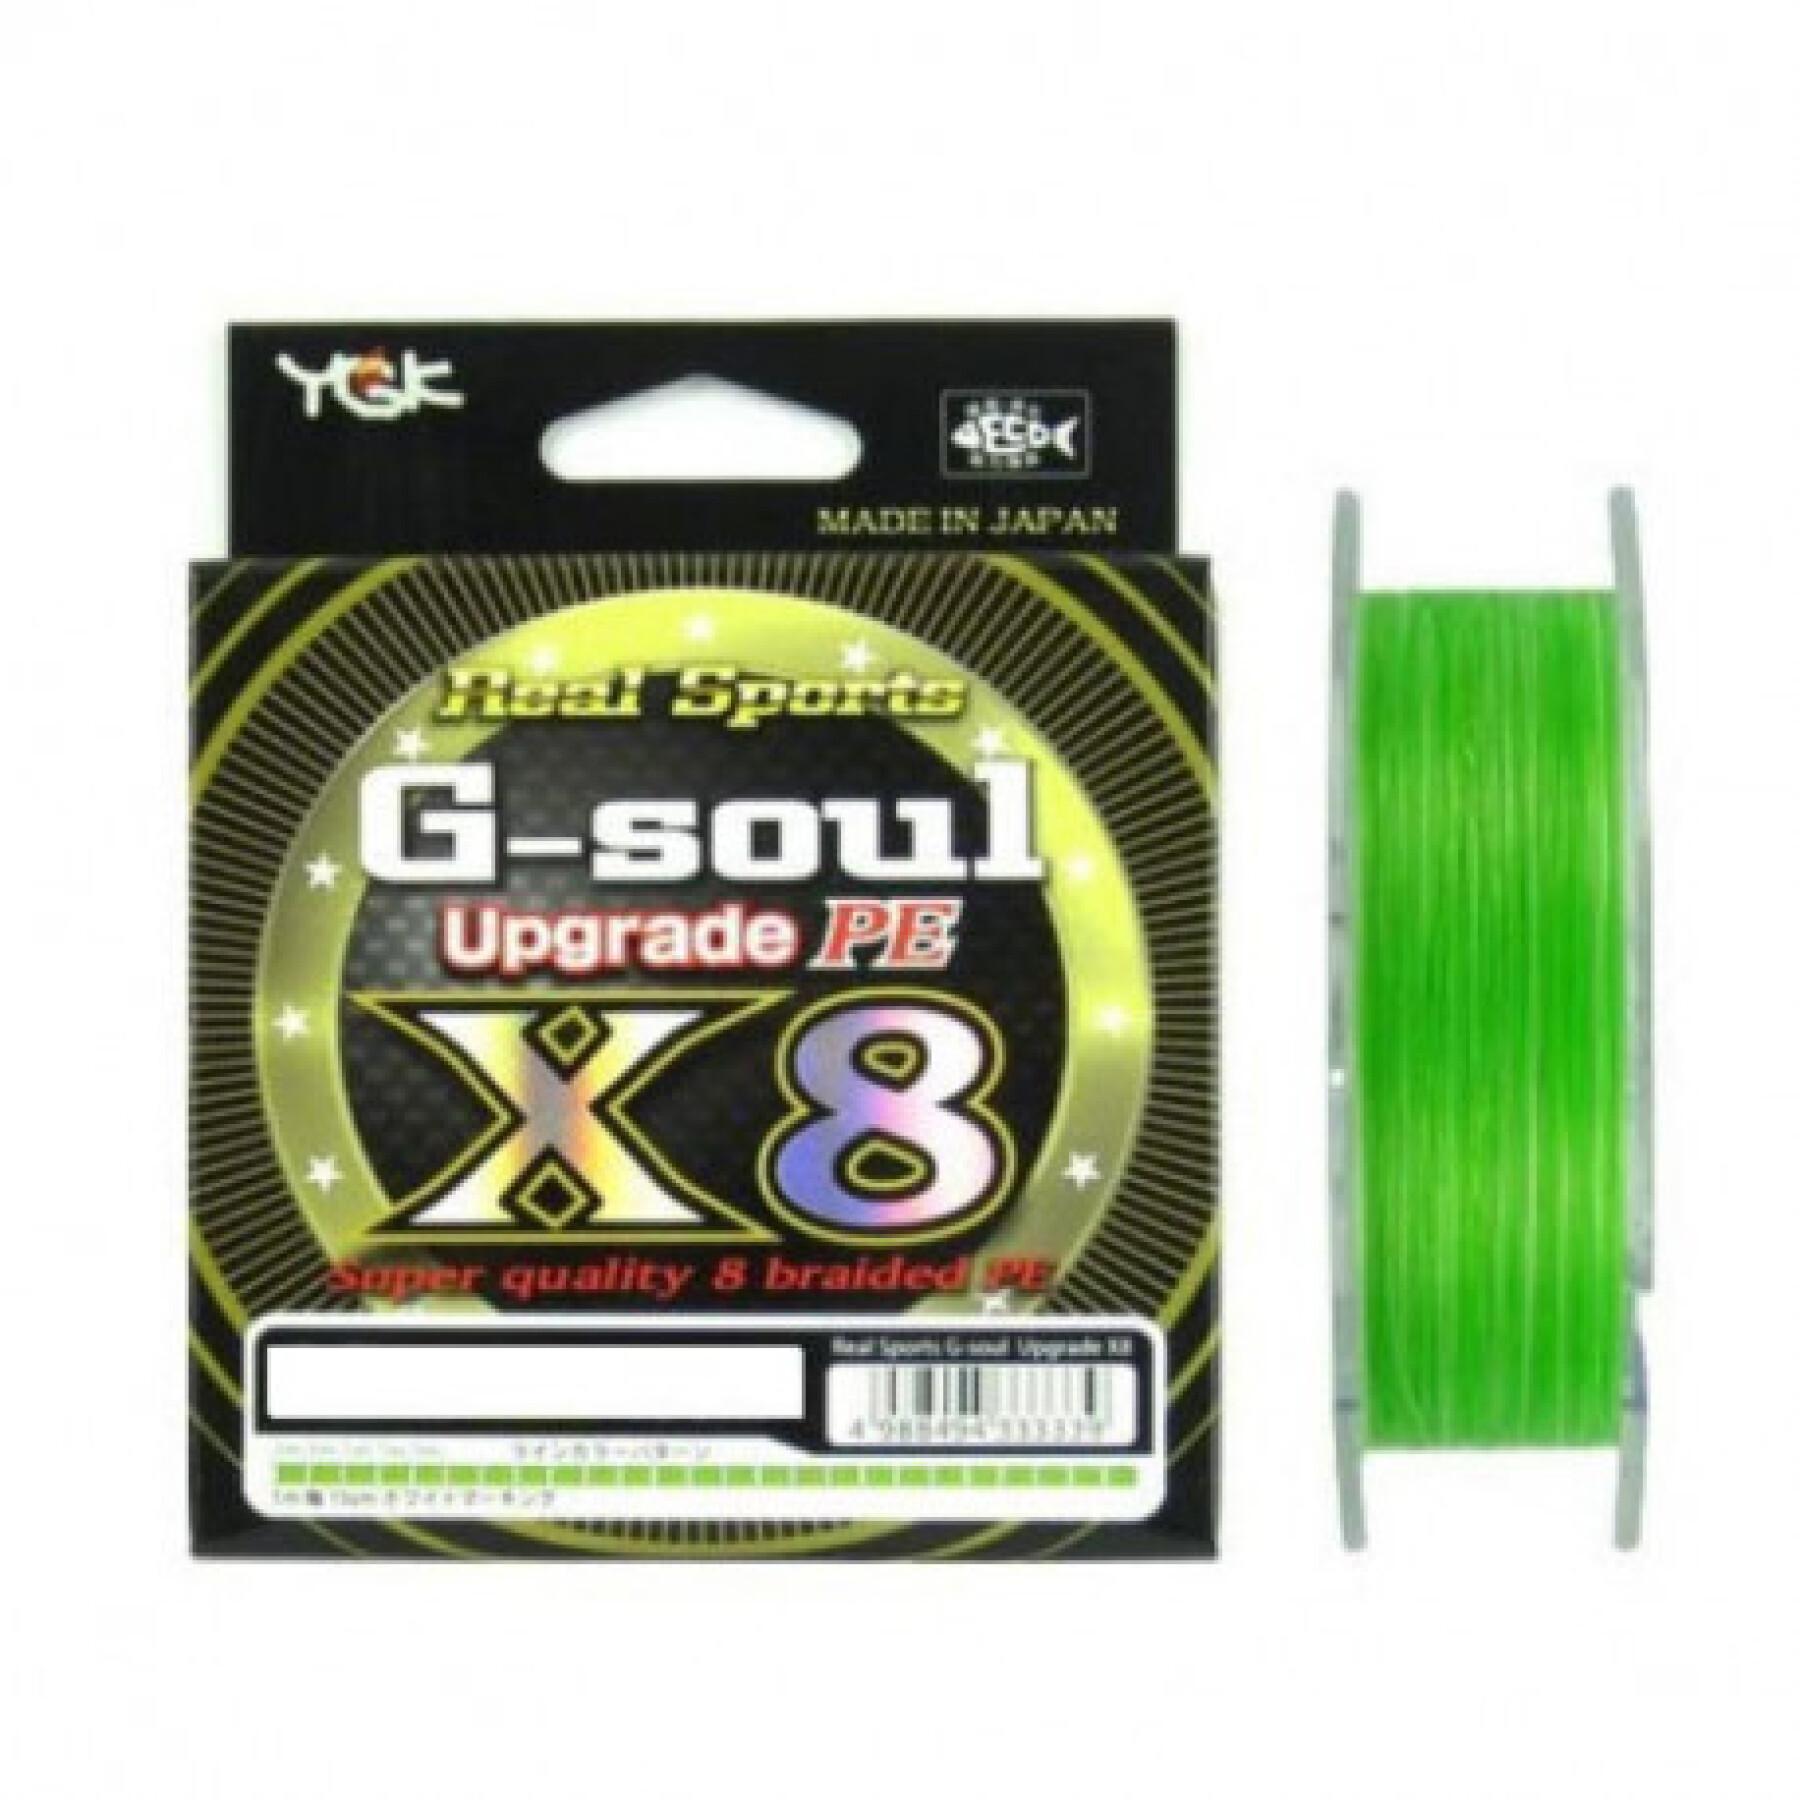 Trenza YGK Wx8 Real Sports G Soul - Pe 1 (16Lb)